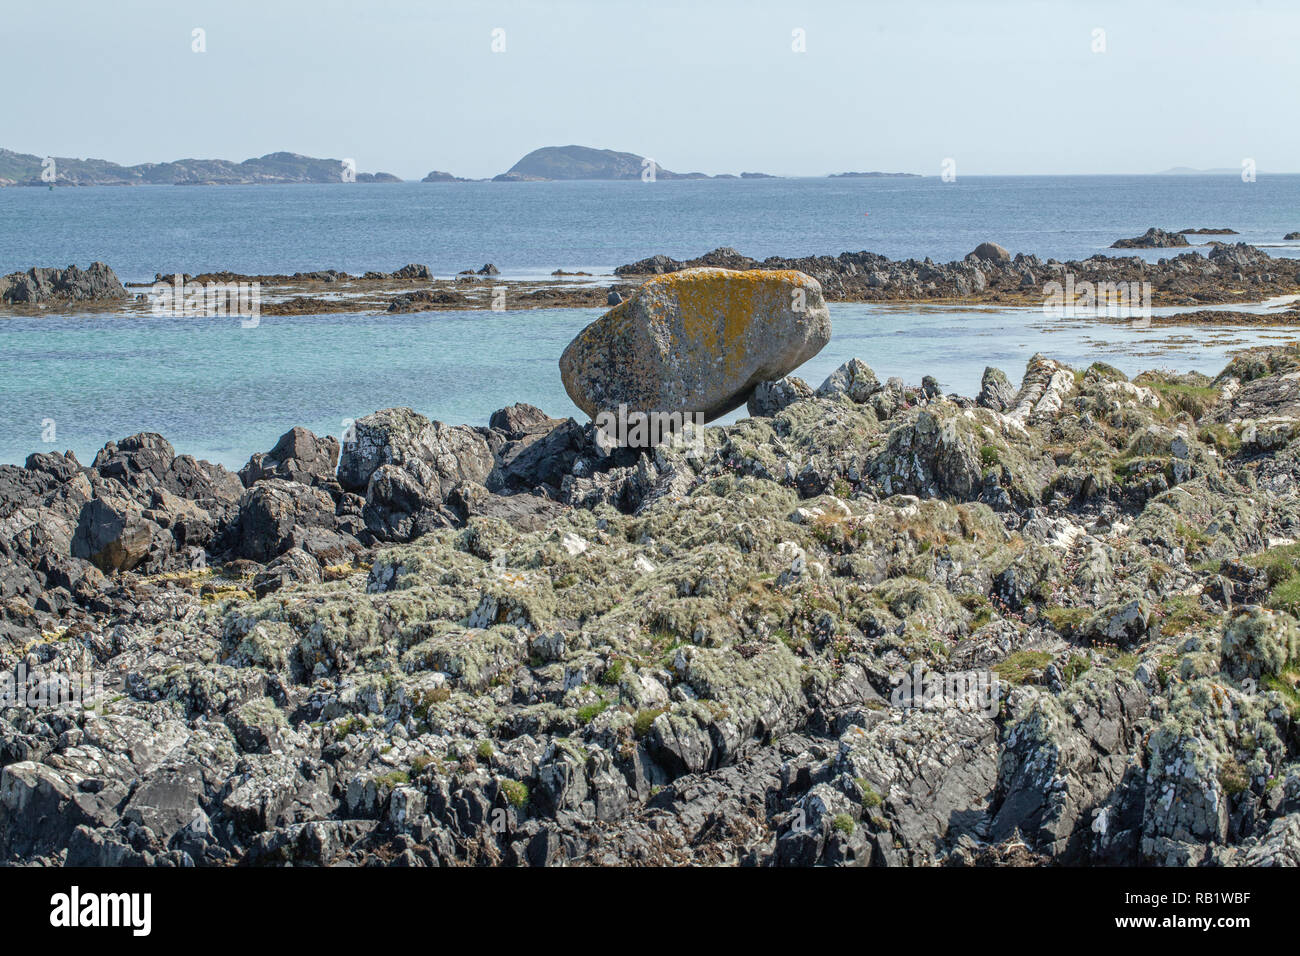 Moraine deposited, large boulder, granite, rock, stone, deposited, foreground. The Isle of Iona, Port Beag Na Sligineach, Sound of Iona, Inner Hebrides. Mull on Horizon. West Coast of Scotland. Stock Photo